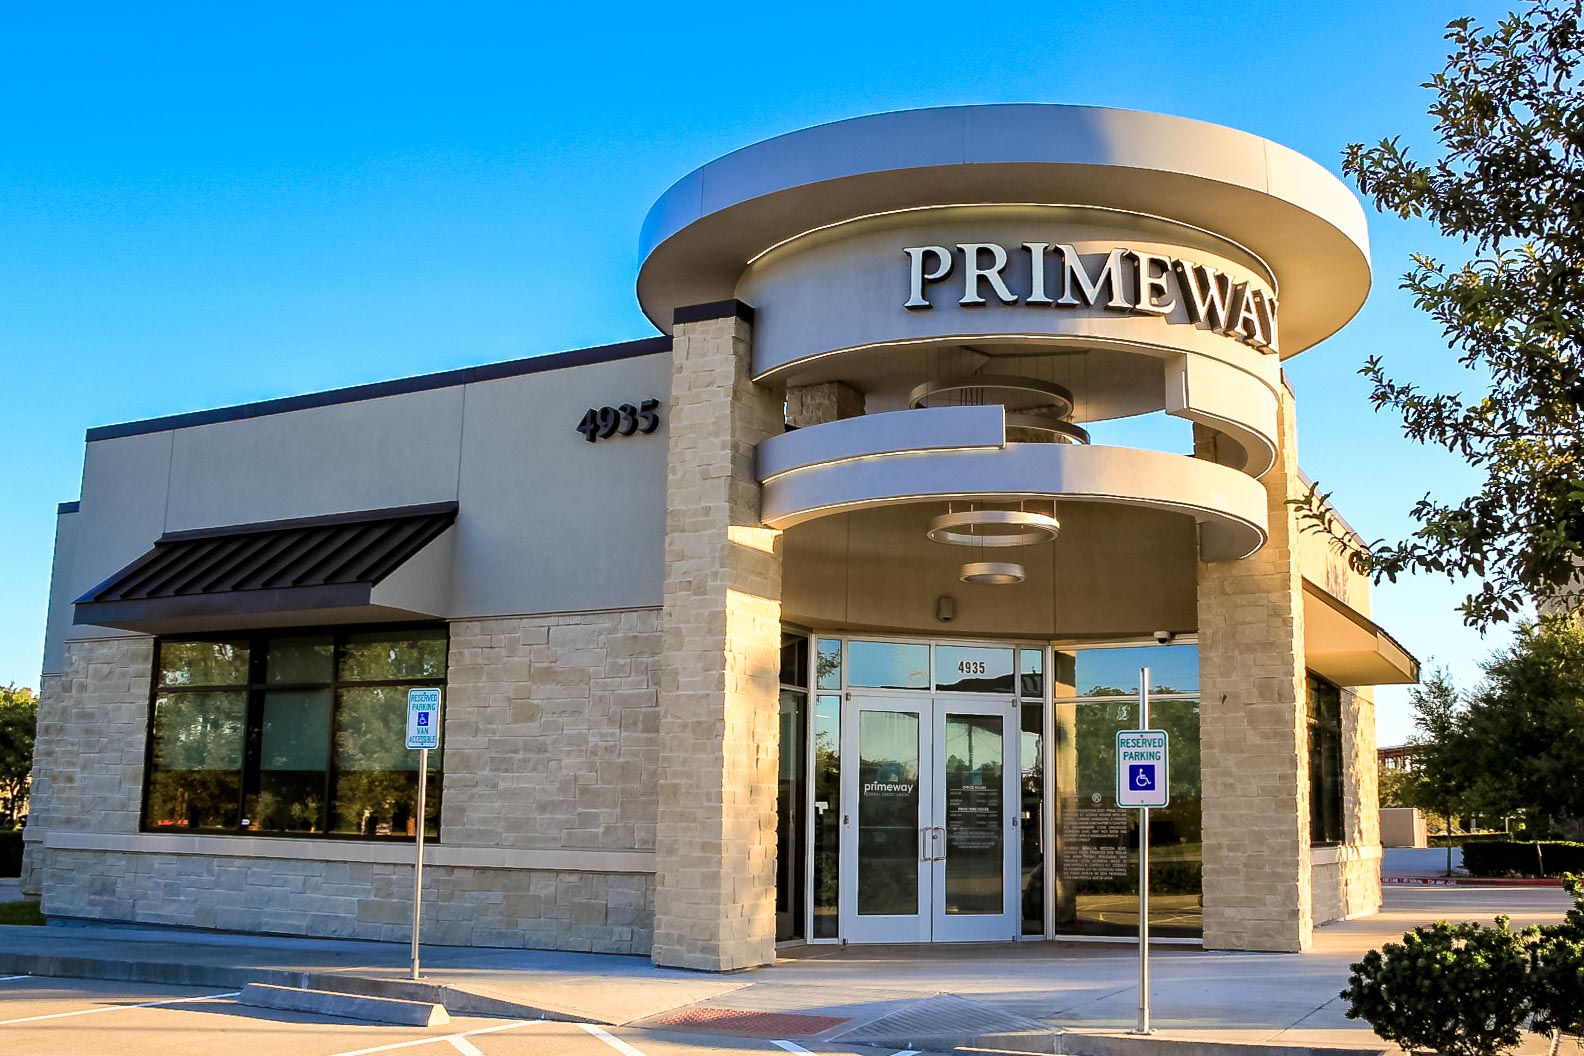 PrimeWay Federal Credit Union - Missouri City Retail Center